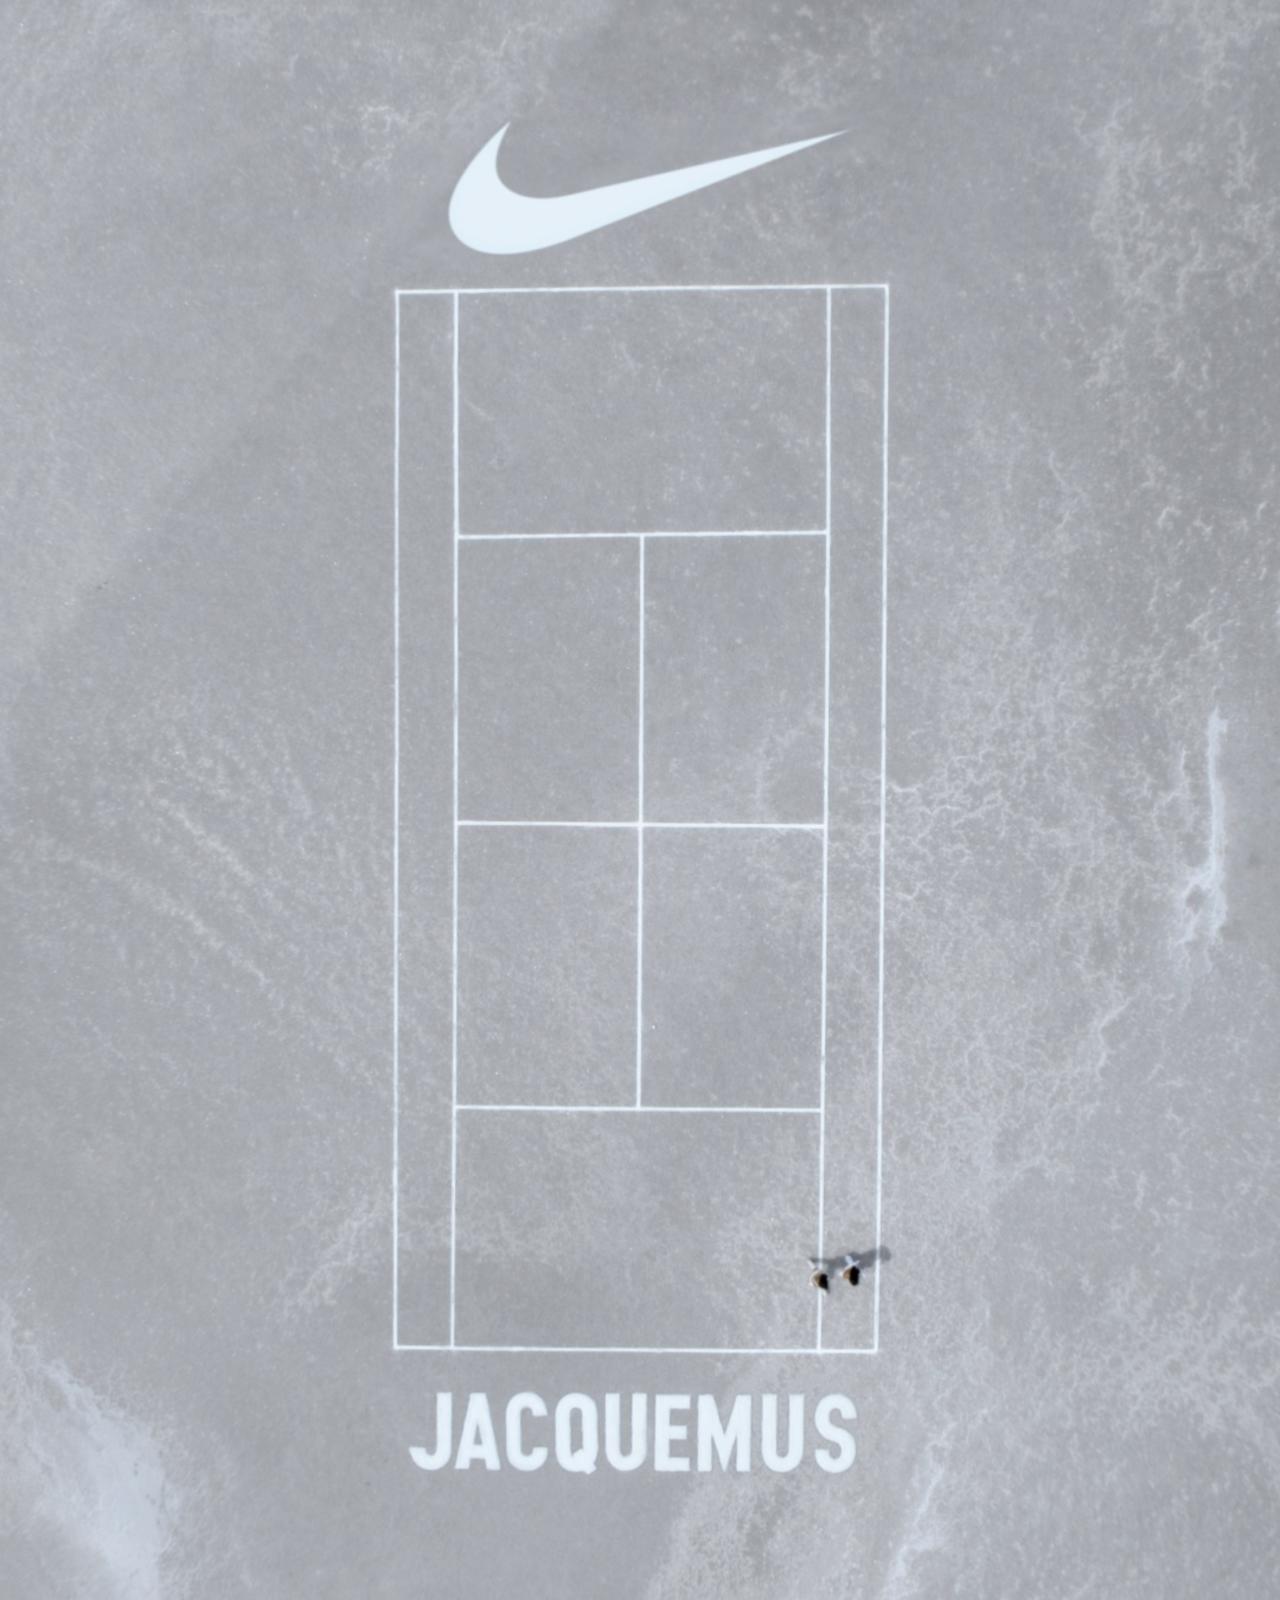 Nike x Jacquemus